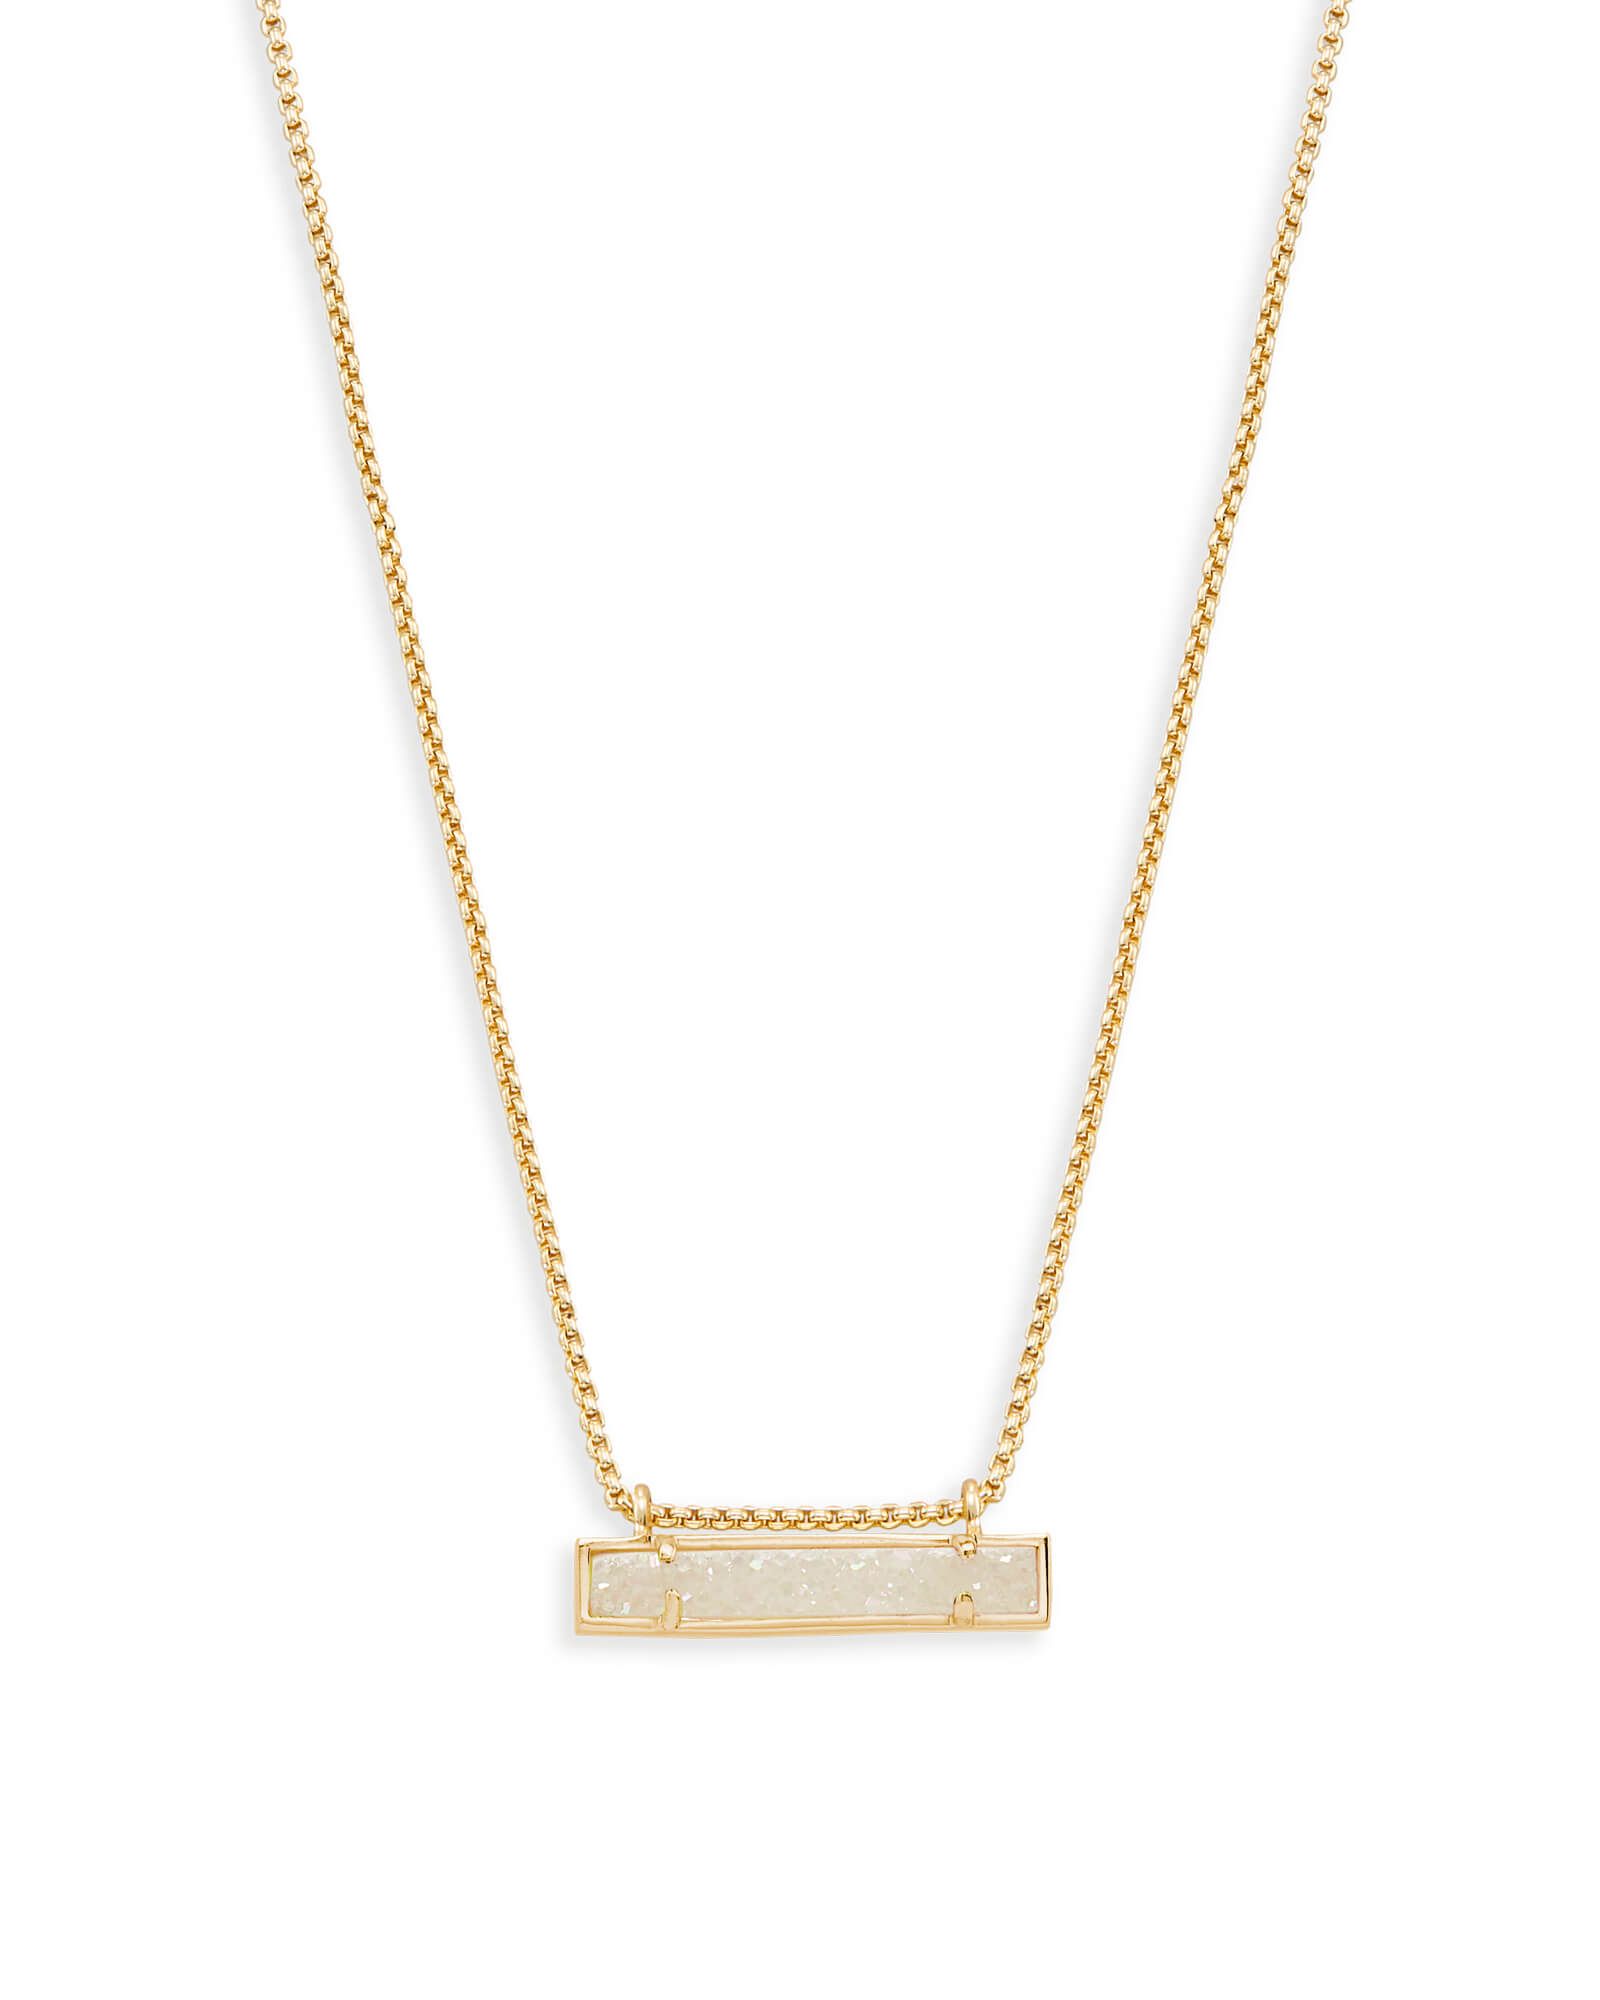 Leanor Gold Bar Pendant Necklace in Drusy | Kendra Scott | Kendra Scott